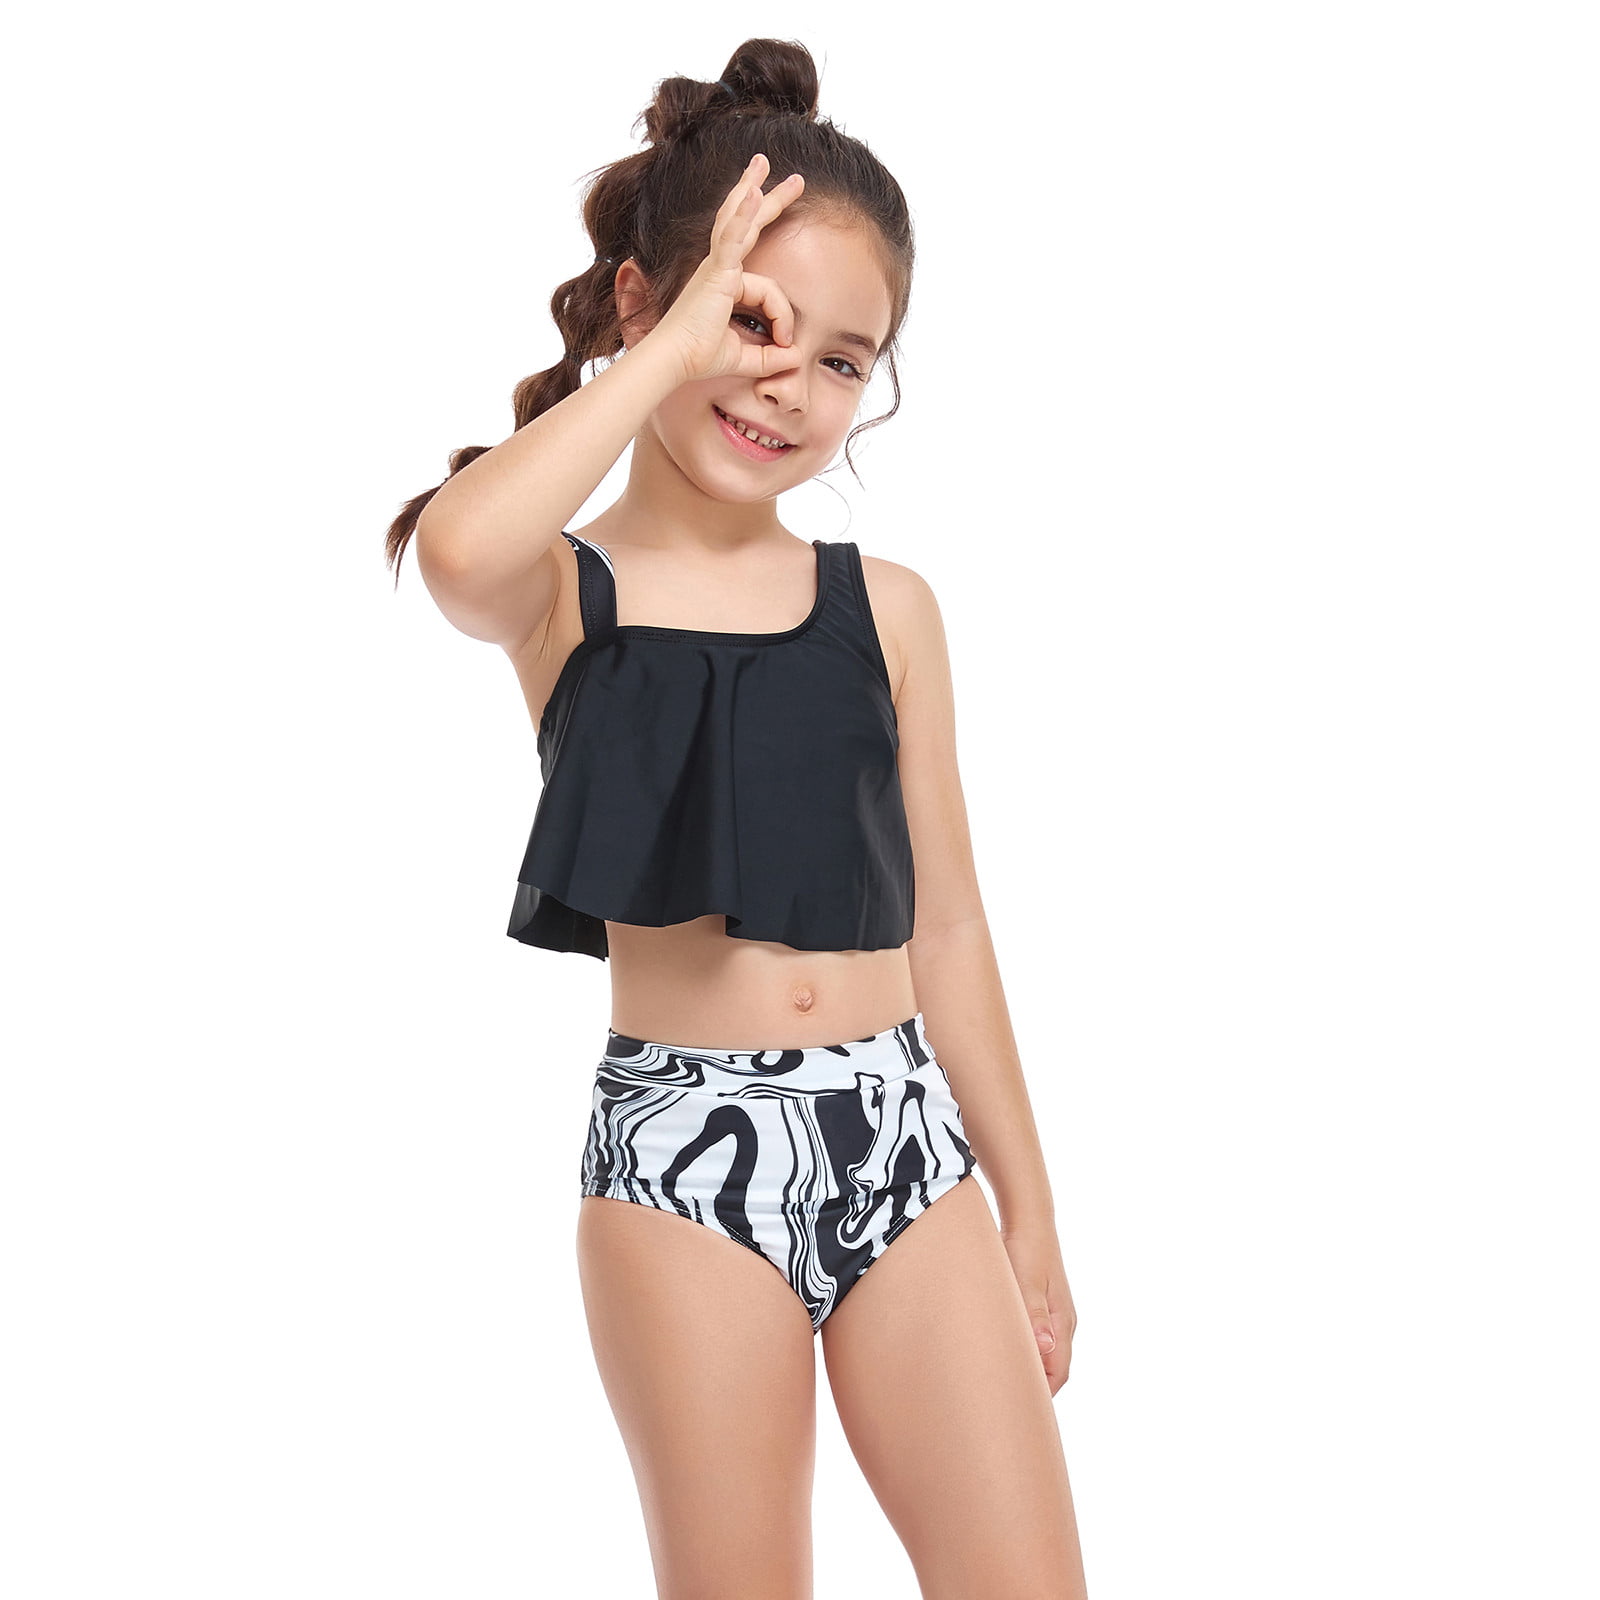 ERTUTUYI Parent Child Split Swimsuit Bikini Mother Daughter Swinsuit Set For Ladies Black Walmart.com